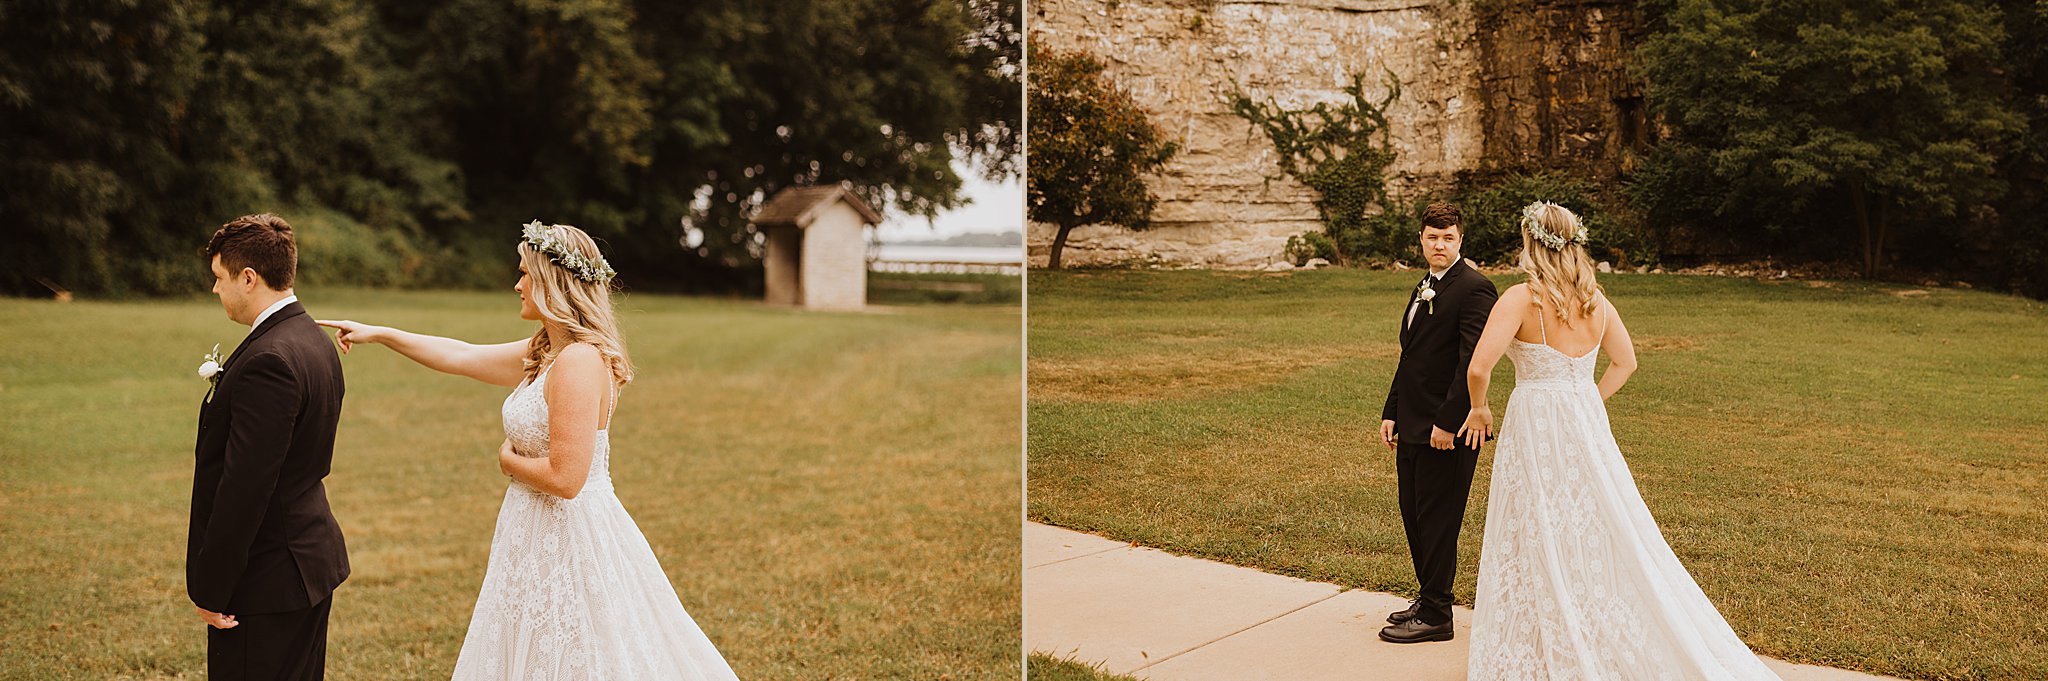 Alton, IL Wedding Photos | Bride and Groom First Look